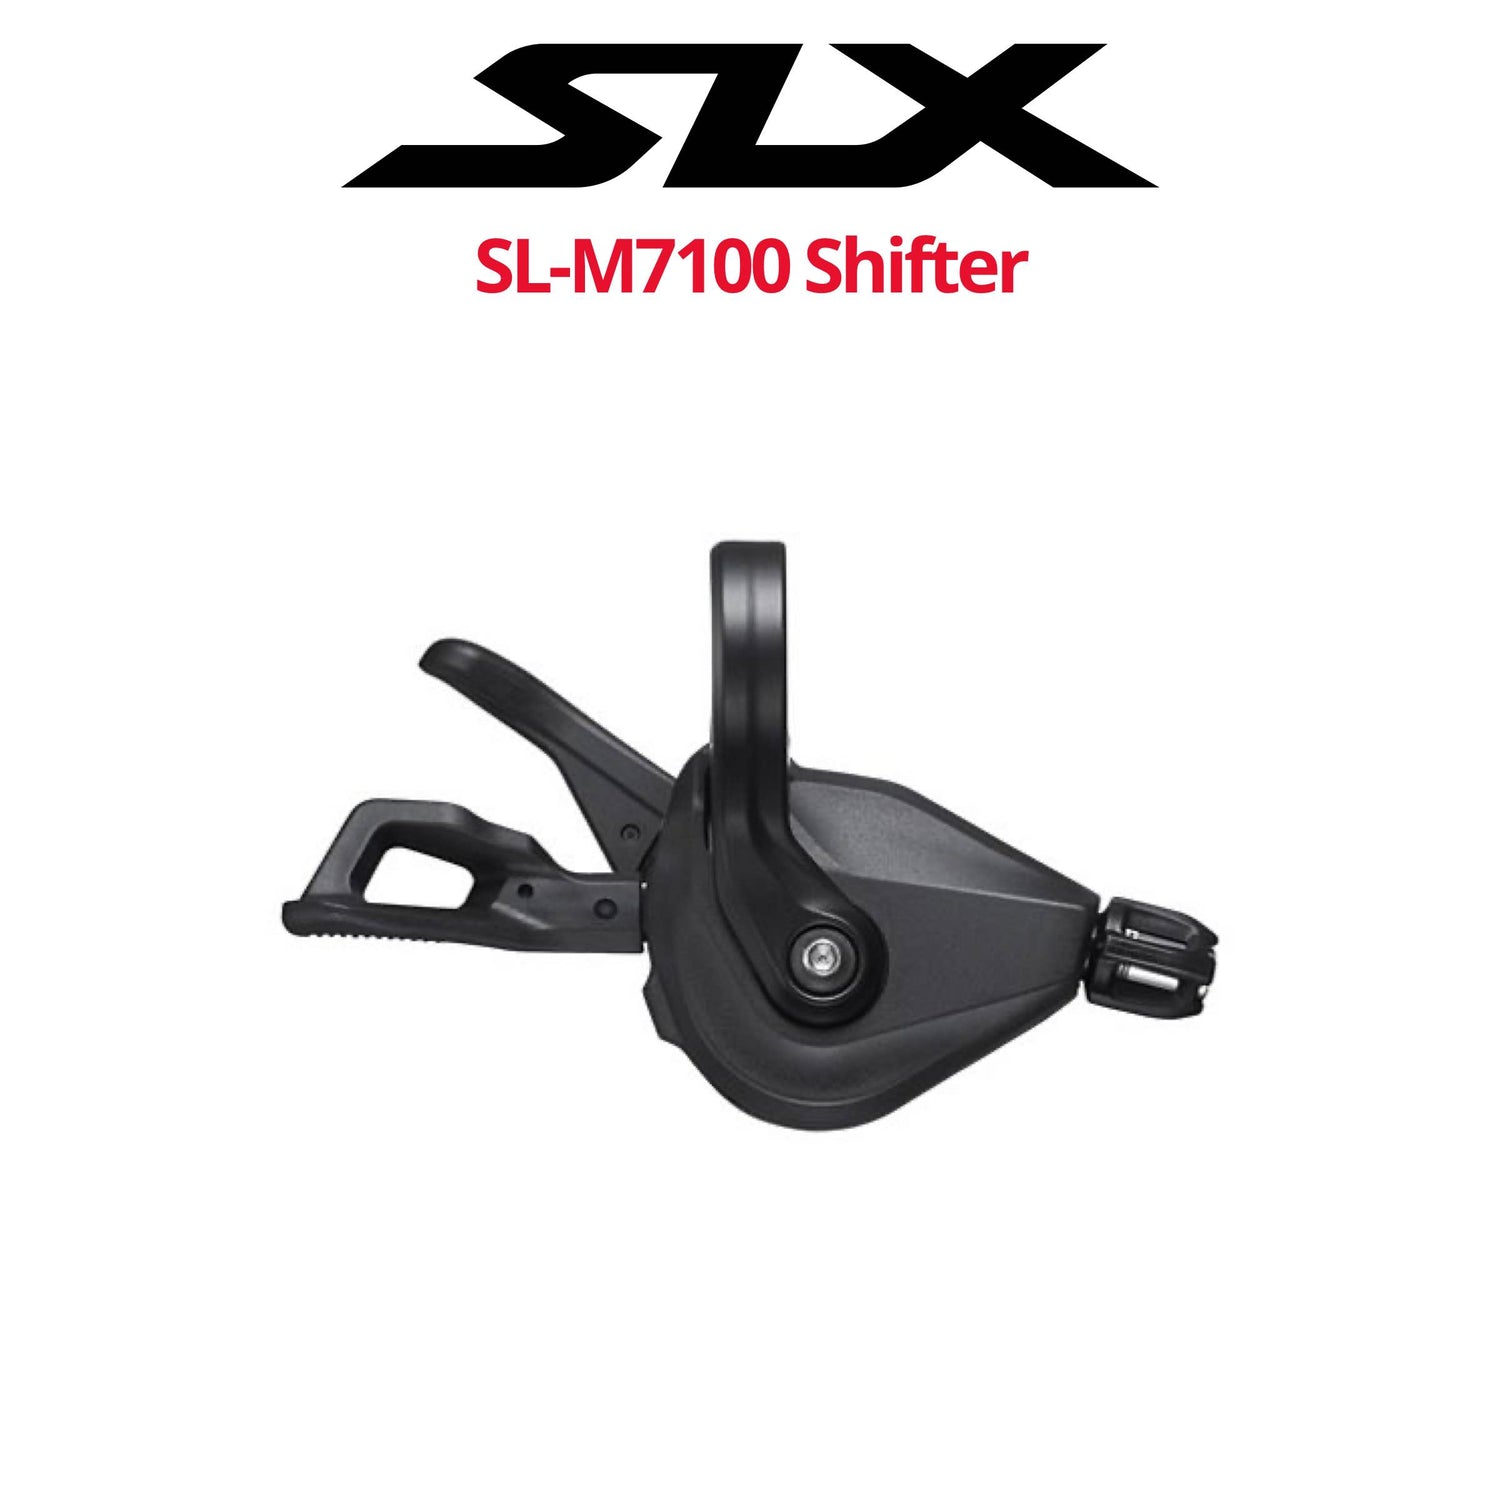 Shimano SLX SL-M7100 Shifter 12 Speed